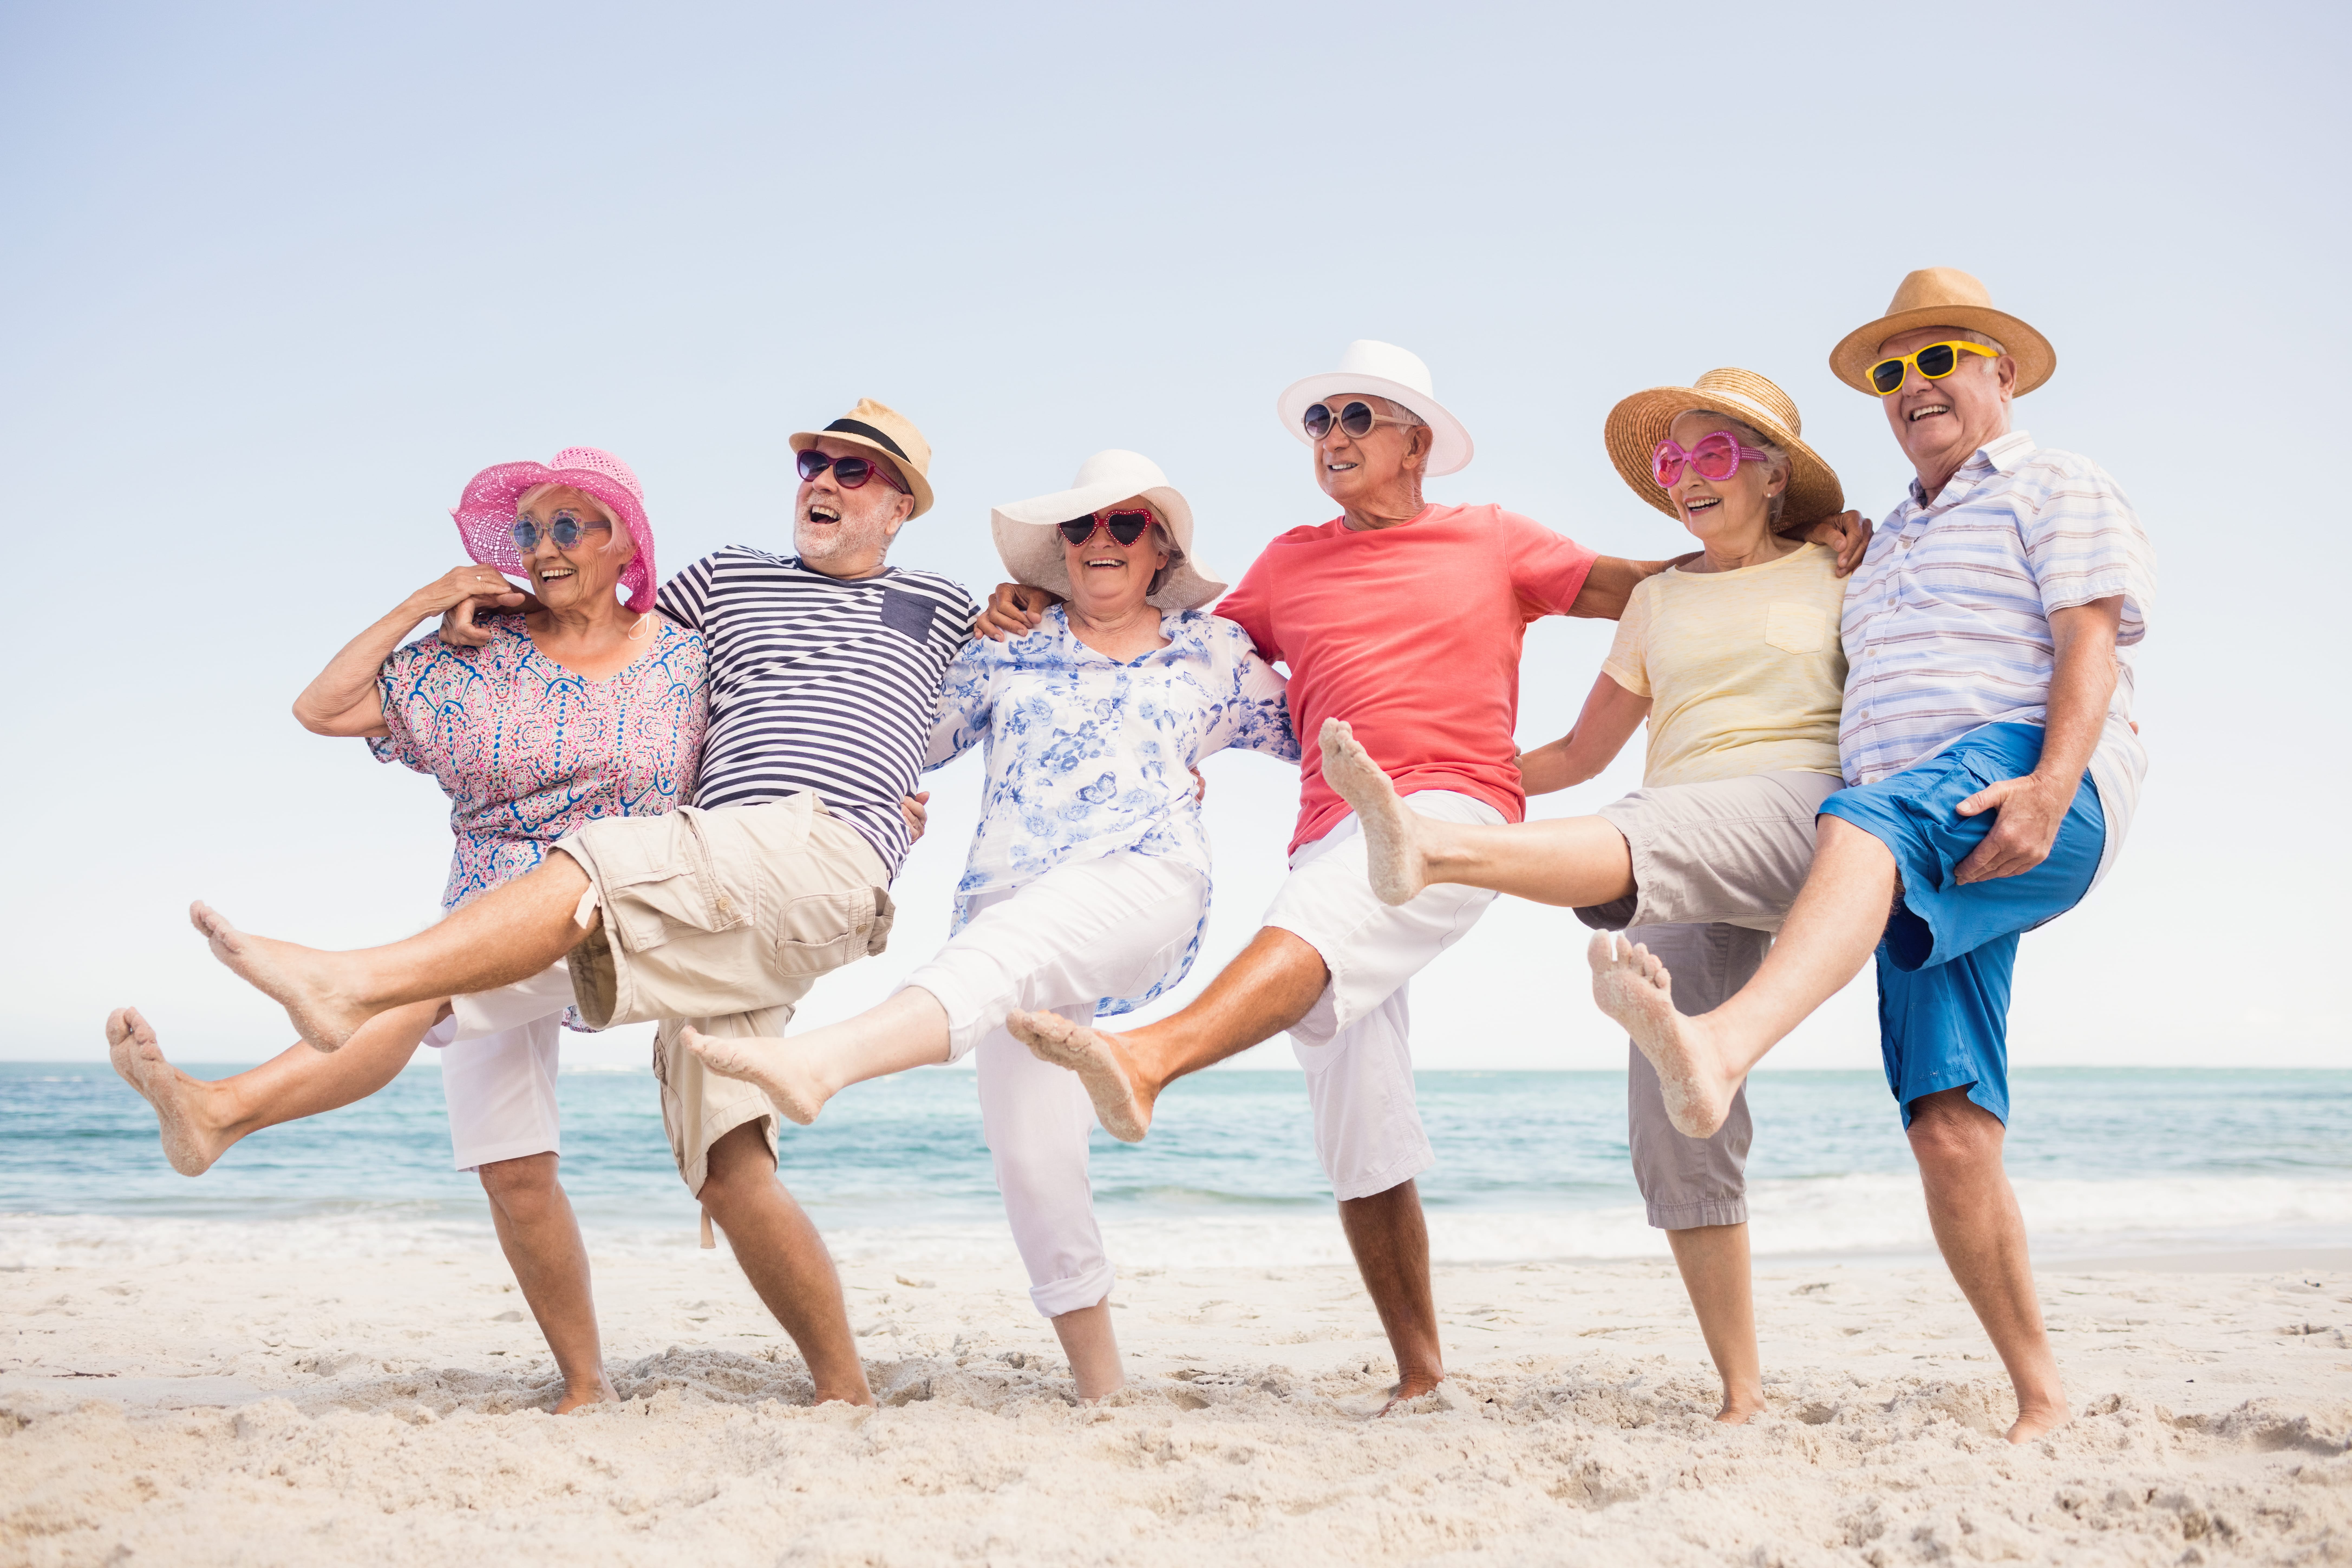 Group of seniors having fun on the beach, kick line